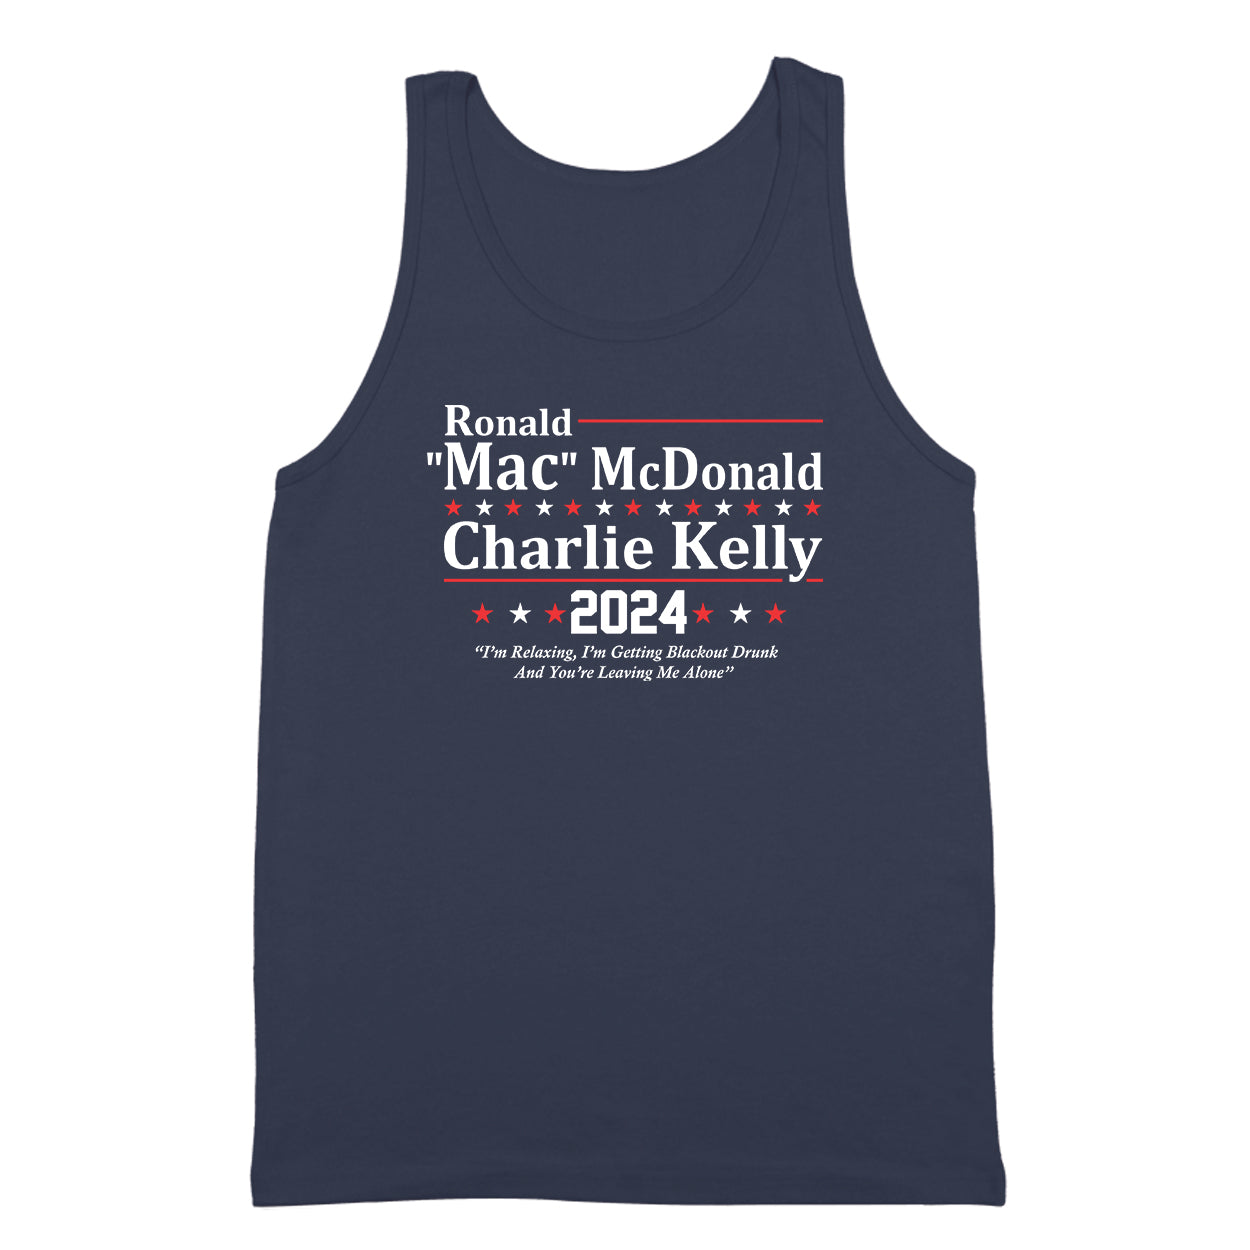 Mac and Charlie 2024 Election Tshirt - Donkey Tees